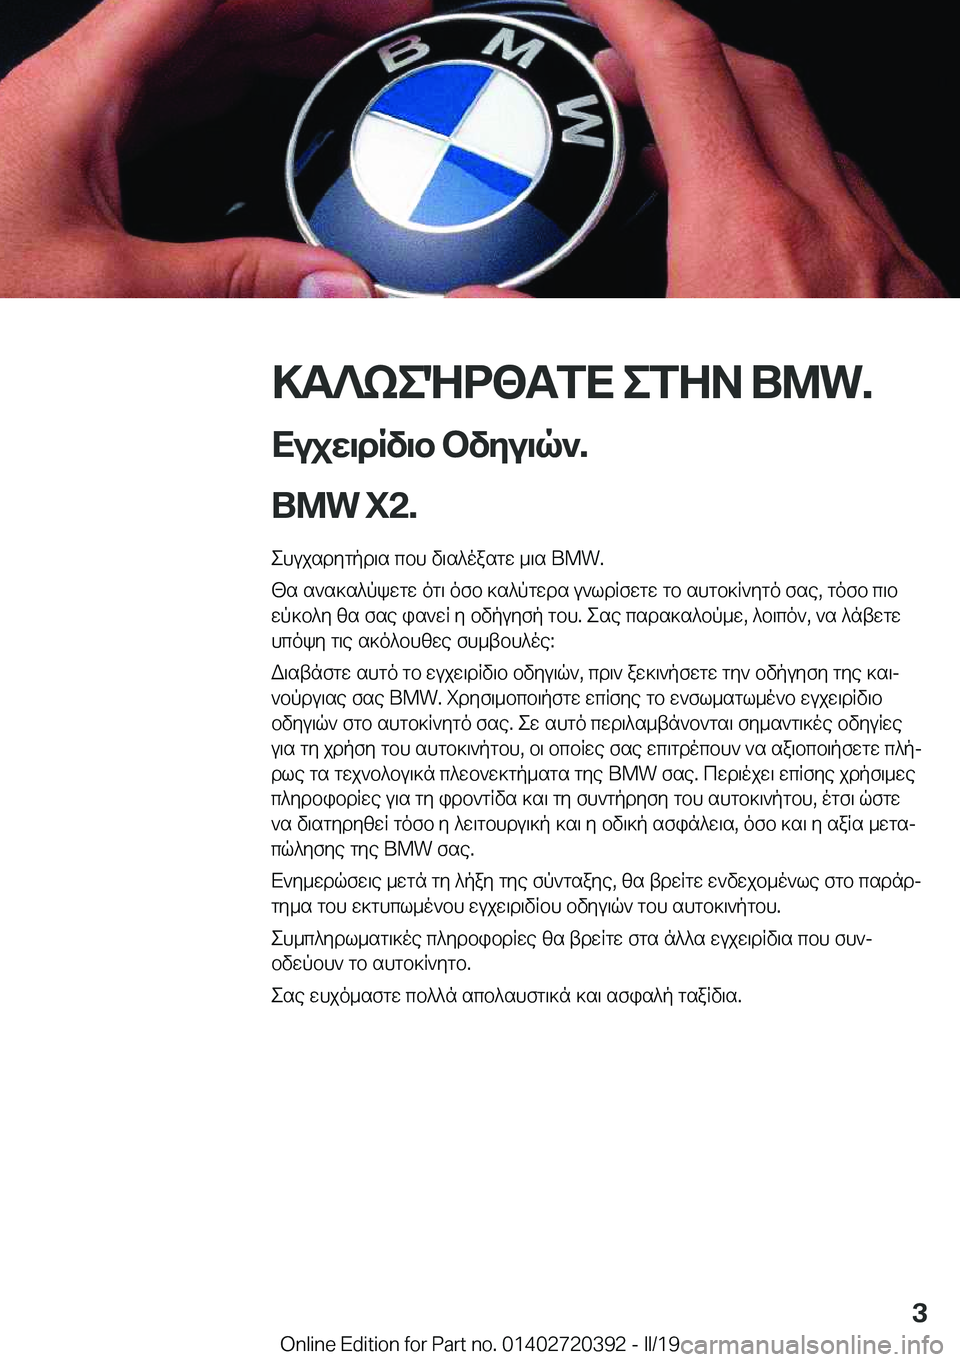 BMW X2 2019  ΟΔΗΓΌΣ ΧΡΉΣΗΣ (in Greek) >T?keNd<TfX�efZA��B�M�W�.
Xujw\dRv\b�bvyu\q`�.
�B�M�W��X�2�. ehujsdygpd\s�cbh�v\s^oasgw�_\s��B�M�W�.
[s�s`s]s^pkwgw�o